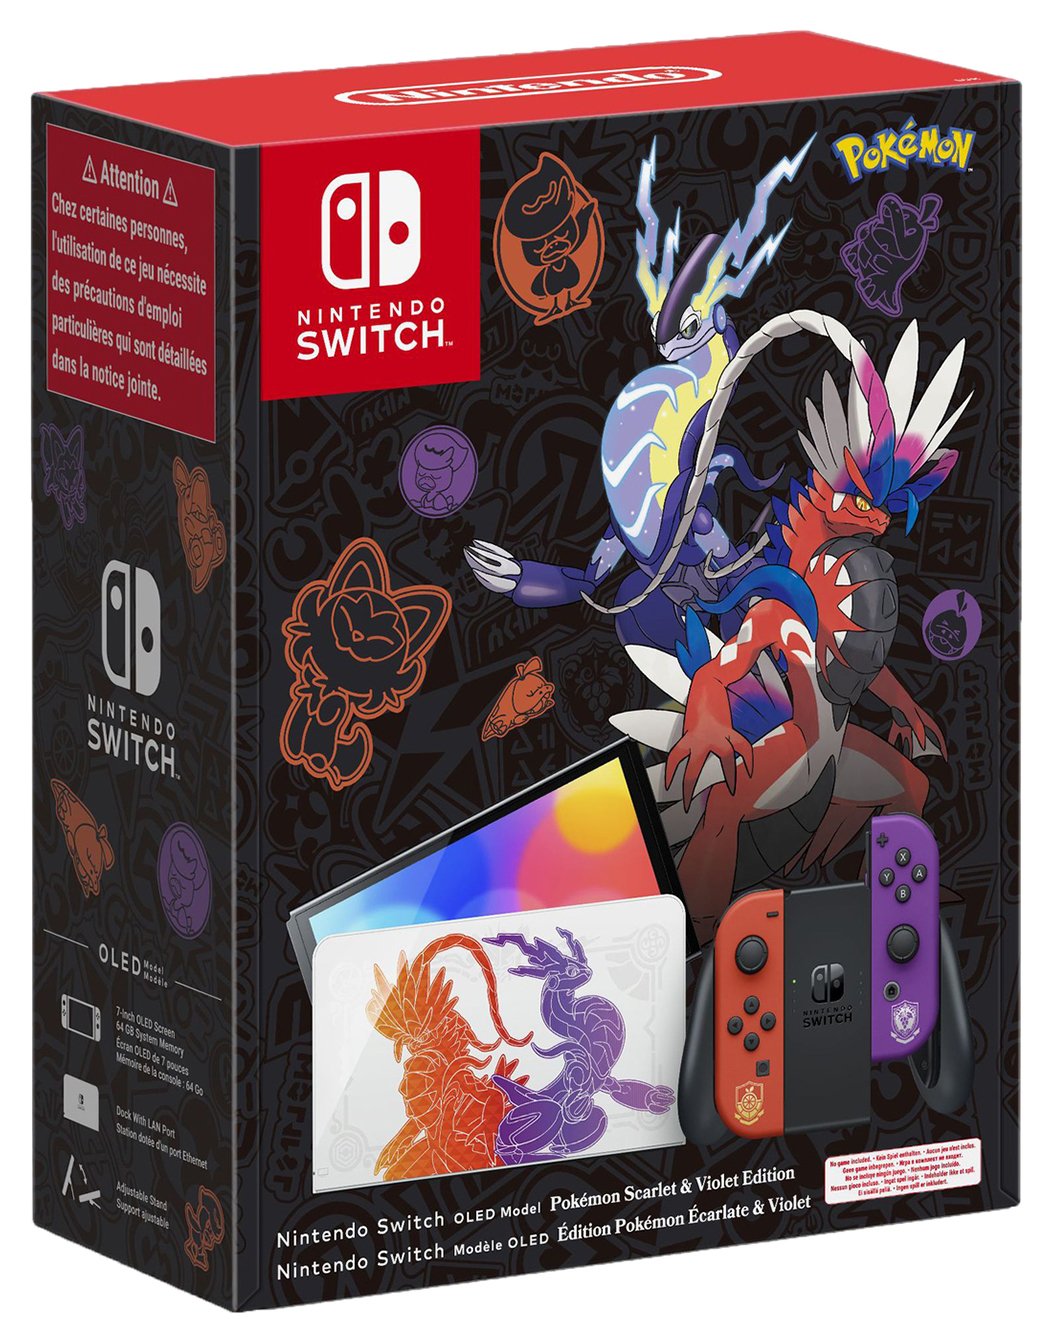 Nintendo Switch OLED Model Console - Pokémon Edition